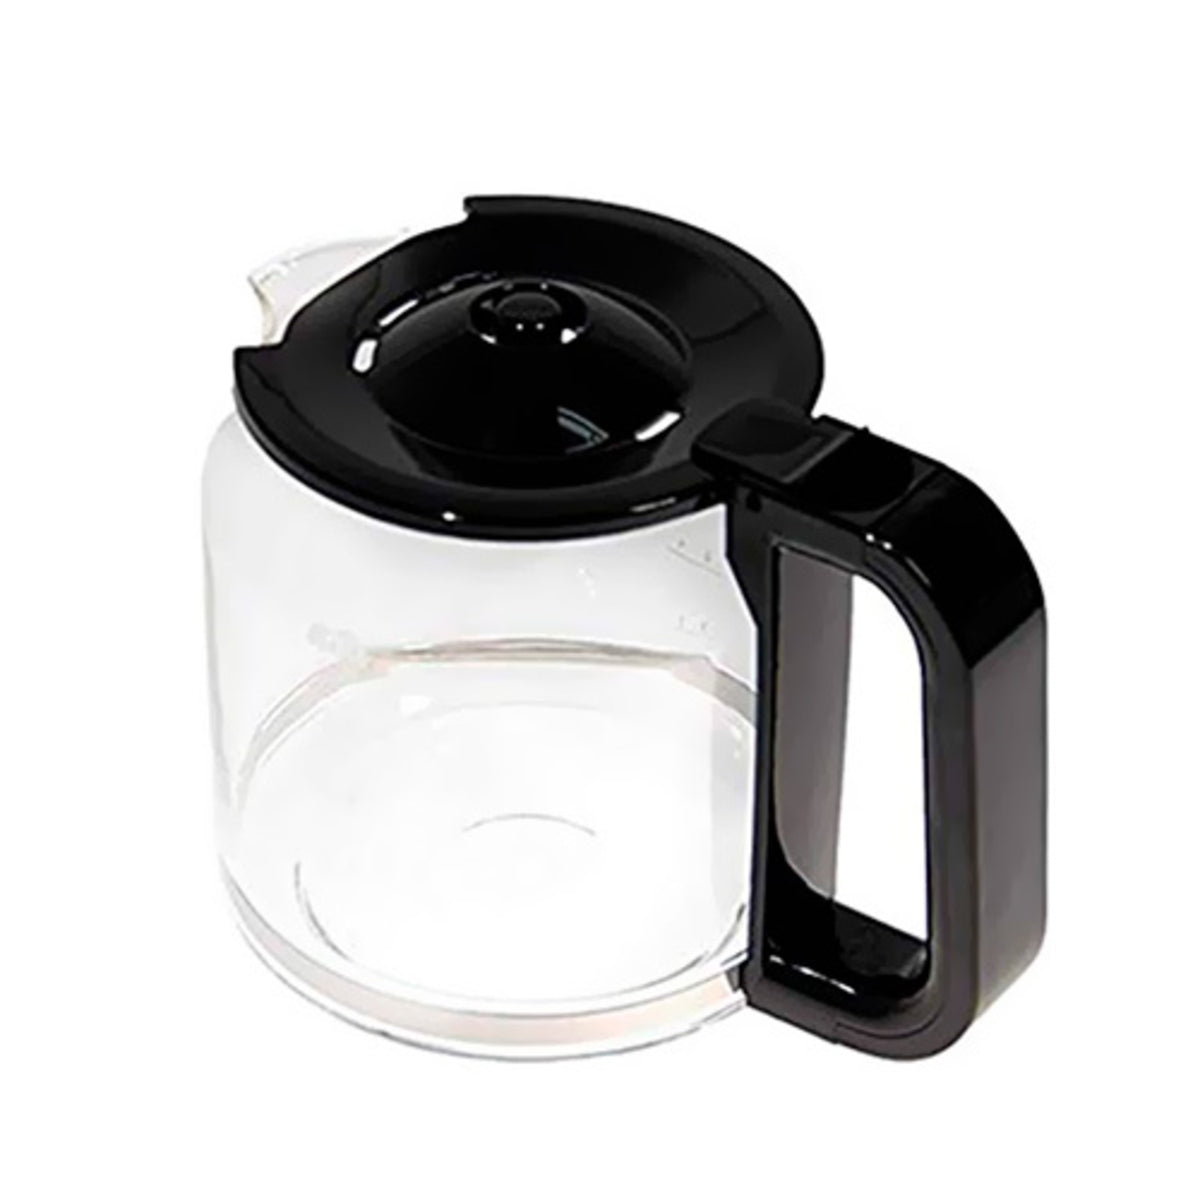 Recambio jarra cafetera Braun Aromaster 10 AX13210010